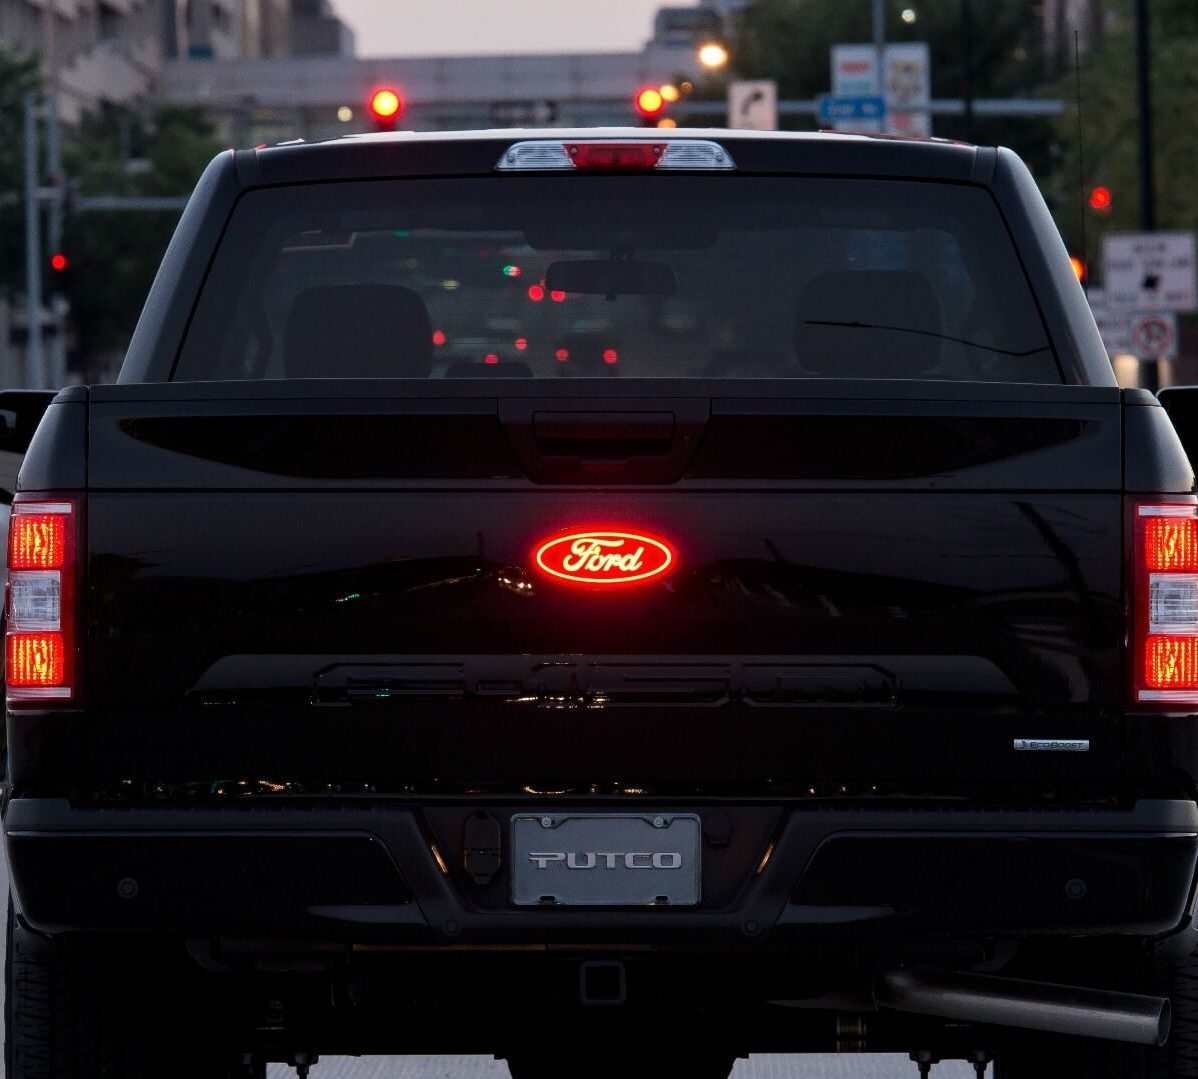 Putco Luminix Red LED Ford Tailgate Emblem (Pat. 11,371,688 B1)